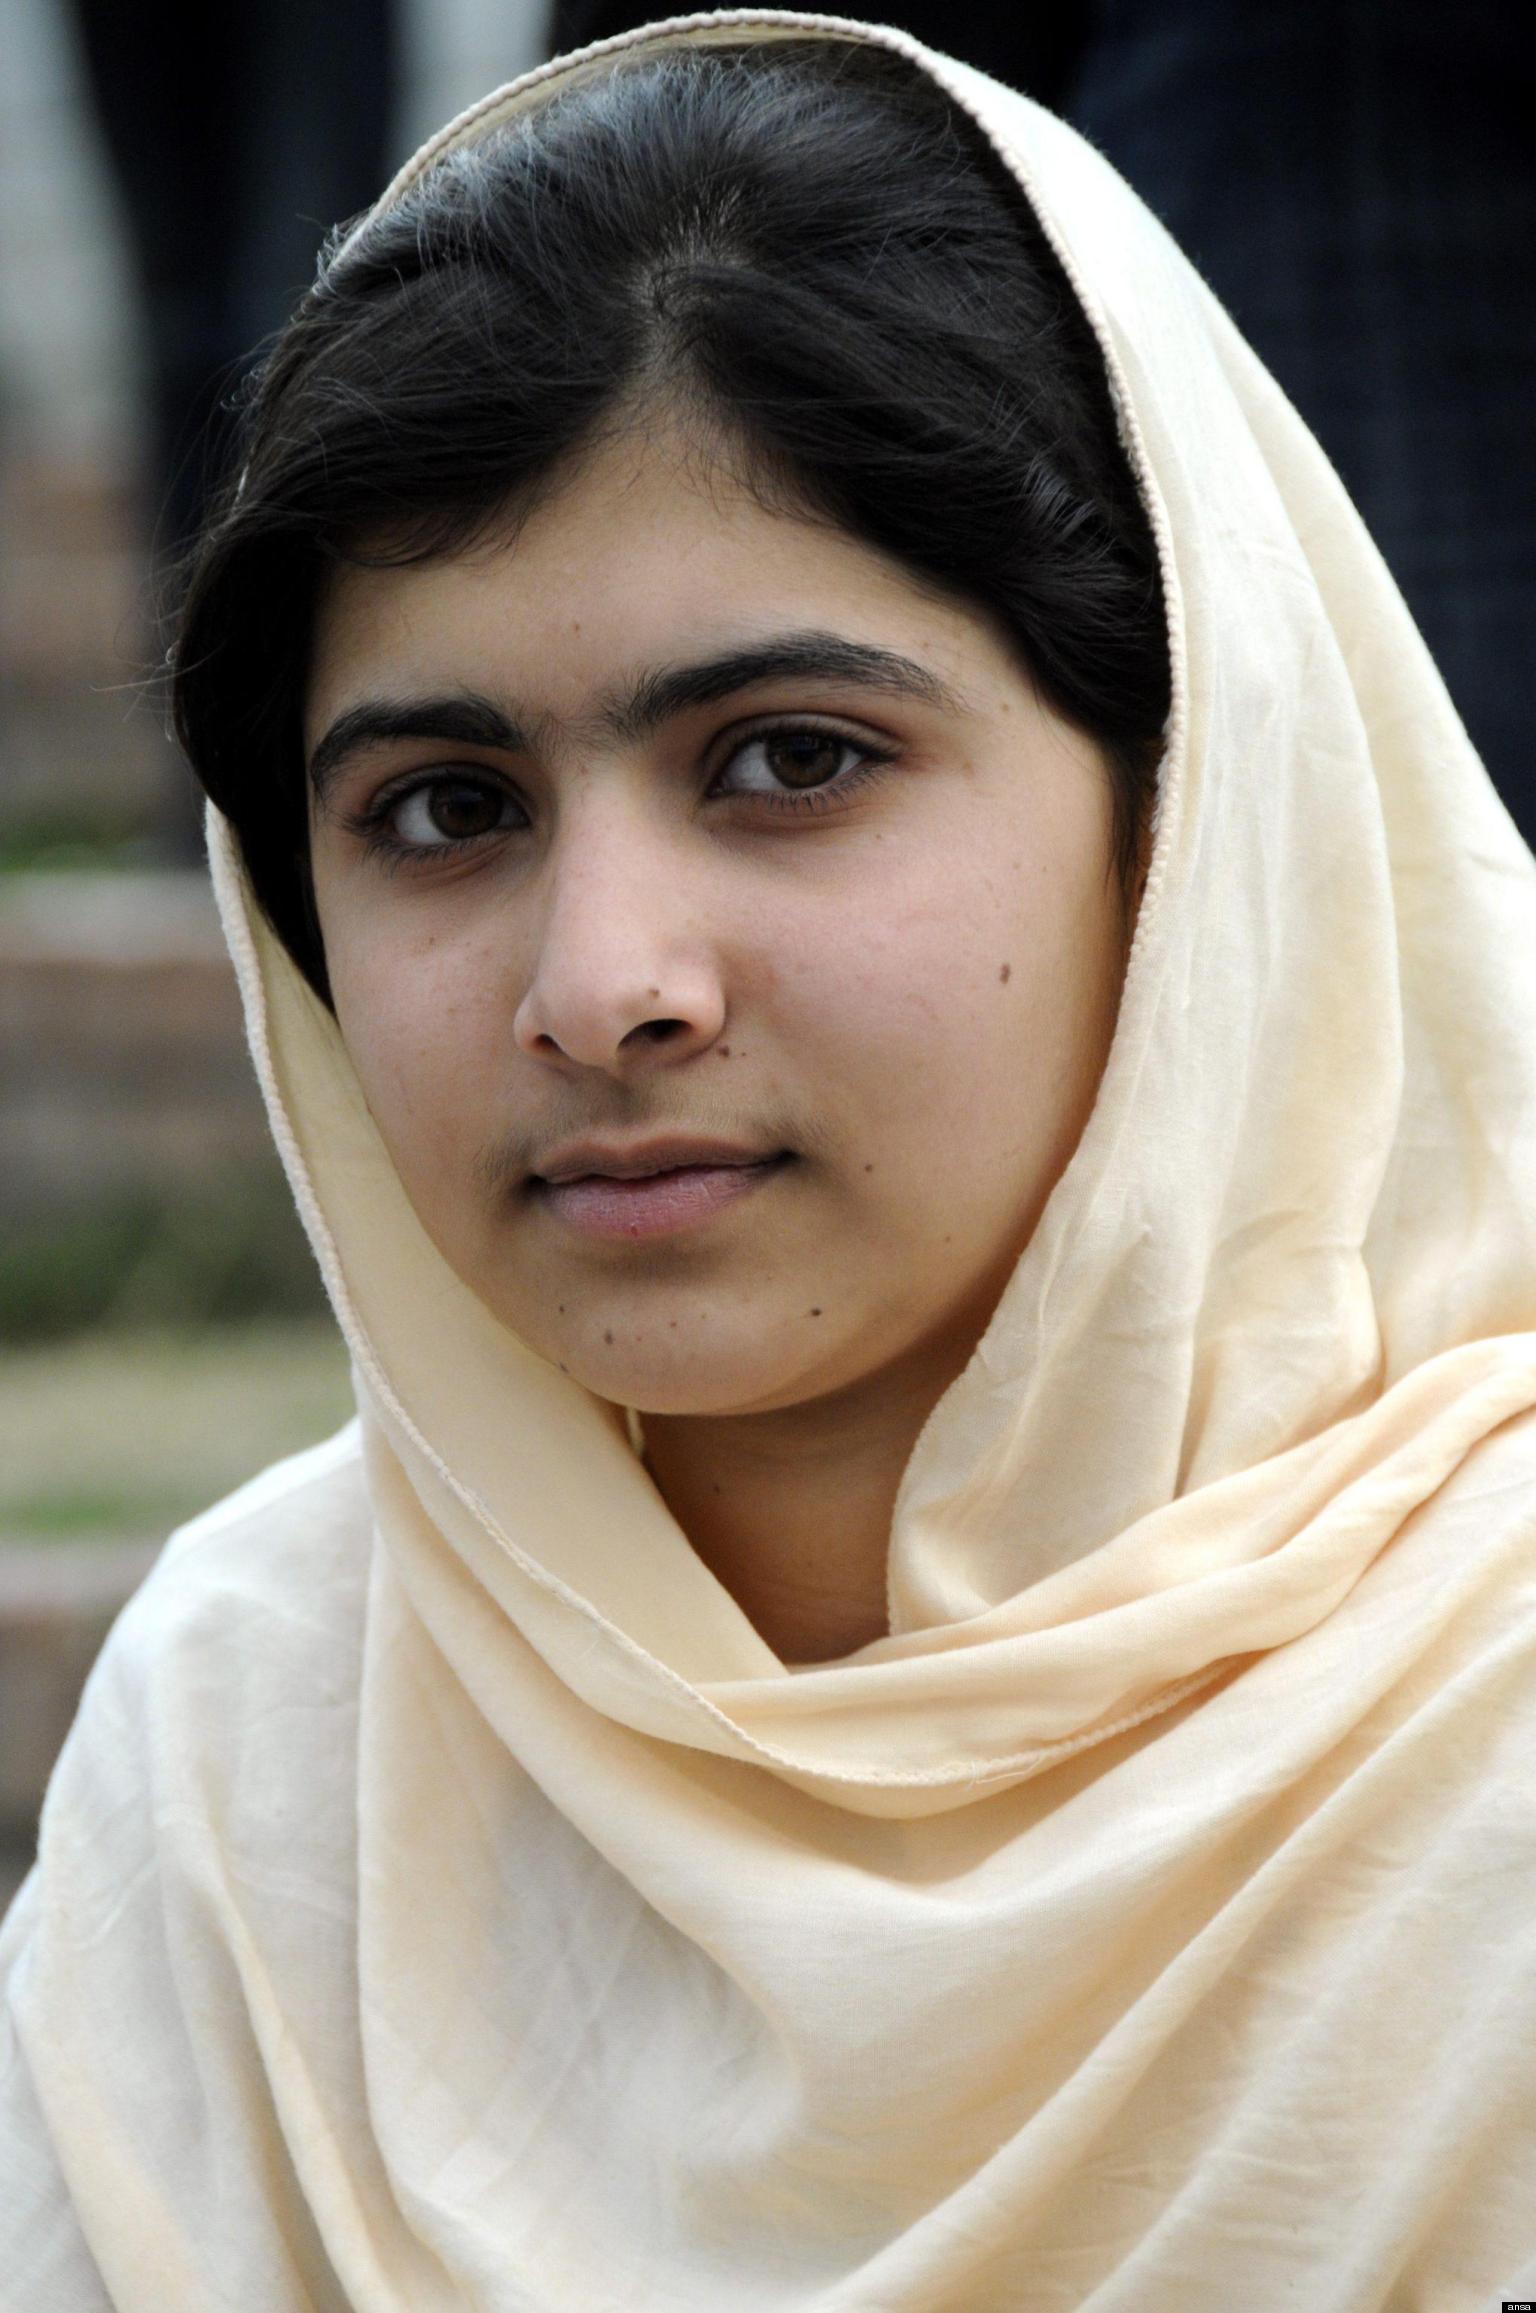 On International Day of the Girl, We Honor Malala Yousafzai.